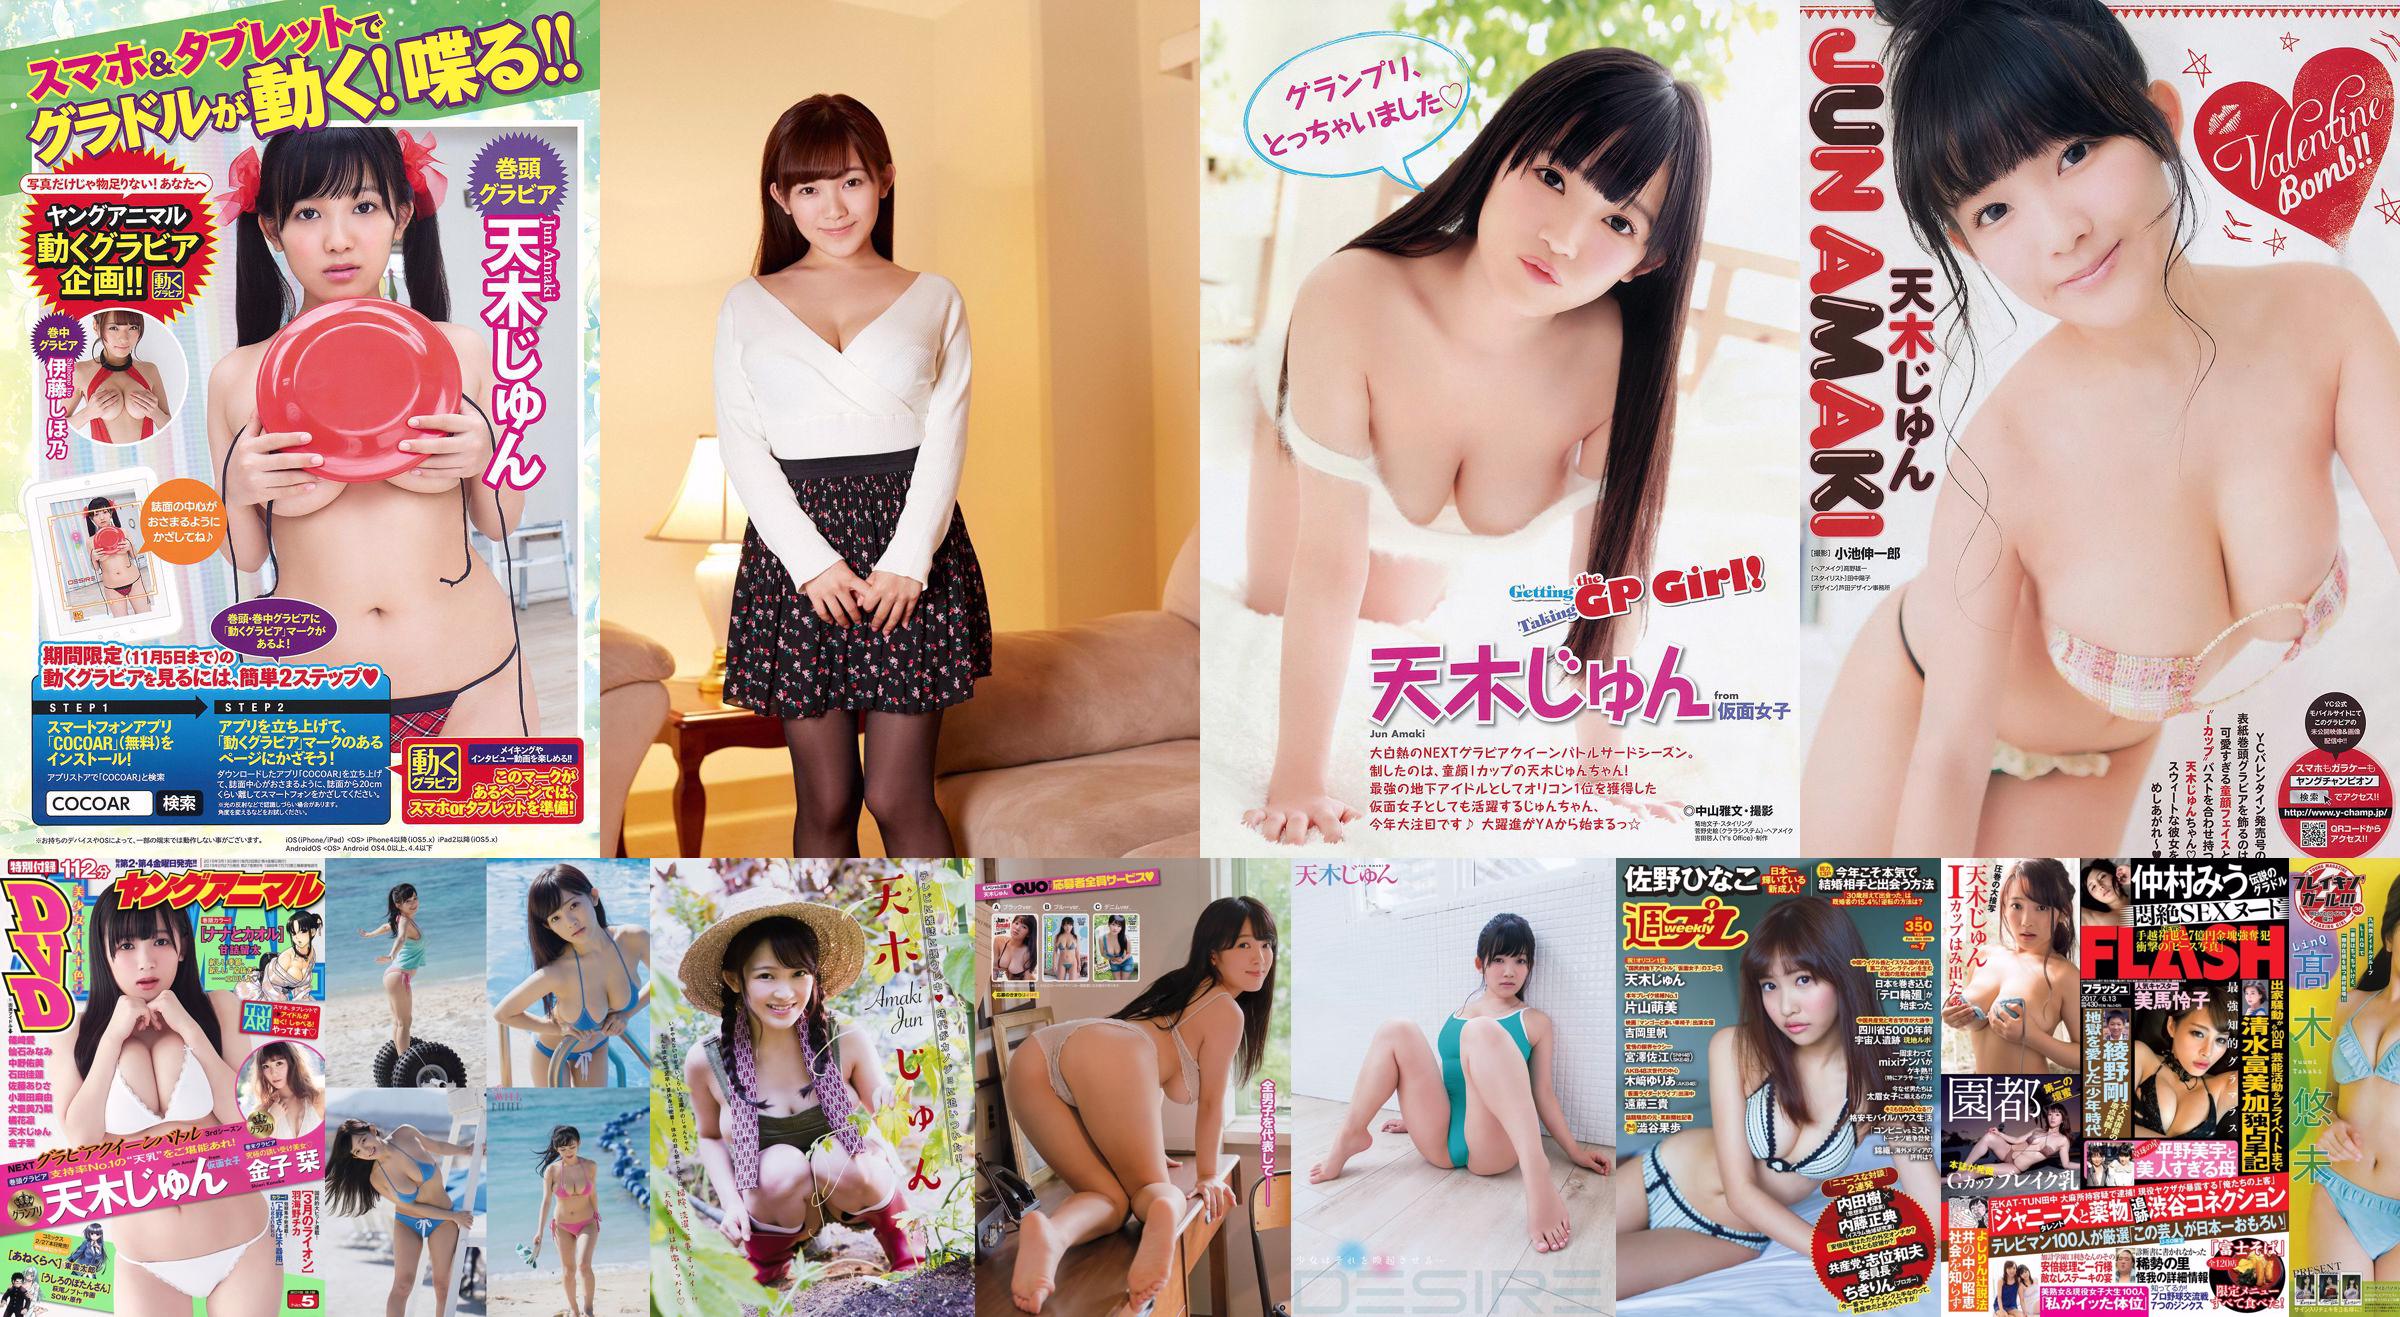 Kara Ryu il 《Shinjuku Journey Photographs》 [Beauty My Girl] VOL.254 No.fe7717 Page 2